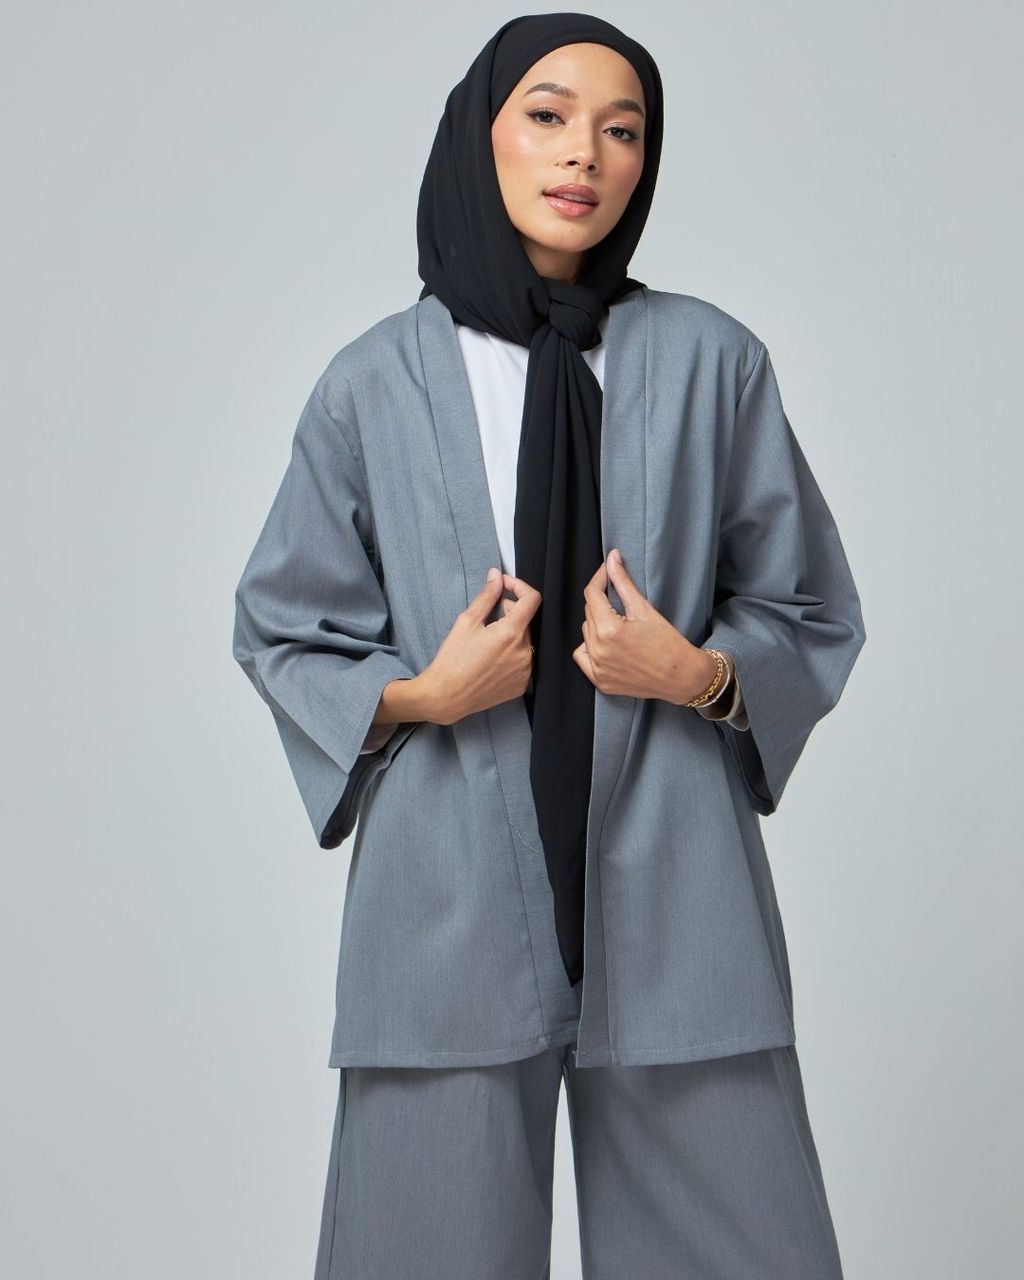 haura-wear-cotton-baju-muslimah-set-seluar-set-skirt-suit-muslimah-set-baju-dan-seluar-muslimah-palazzo (16)